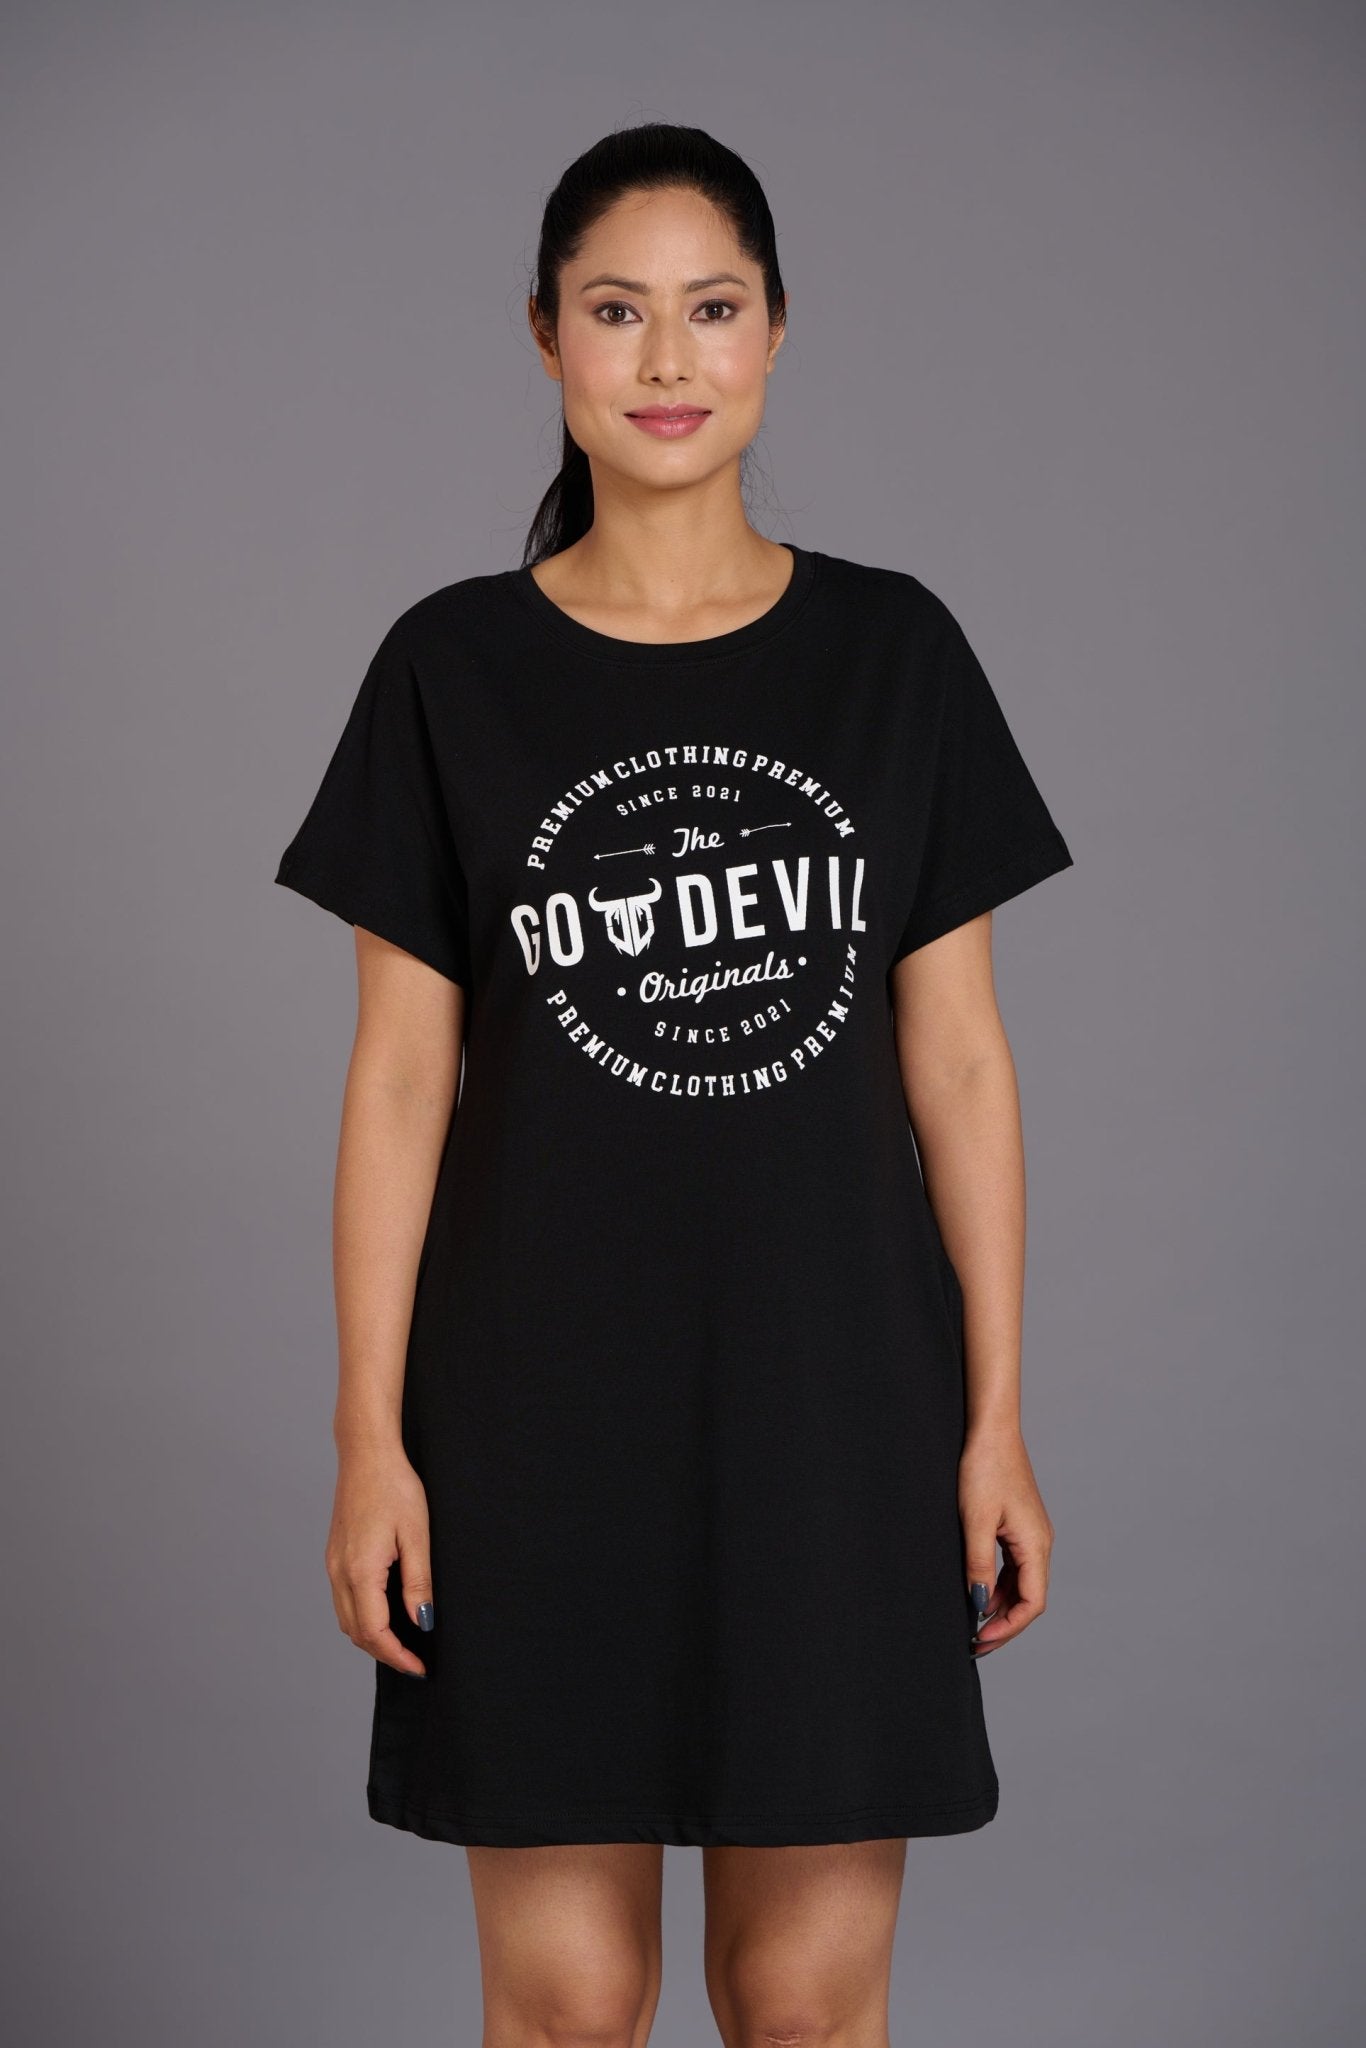 Go Devils Originals Black Dress for Women - Go Devil